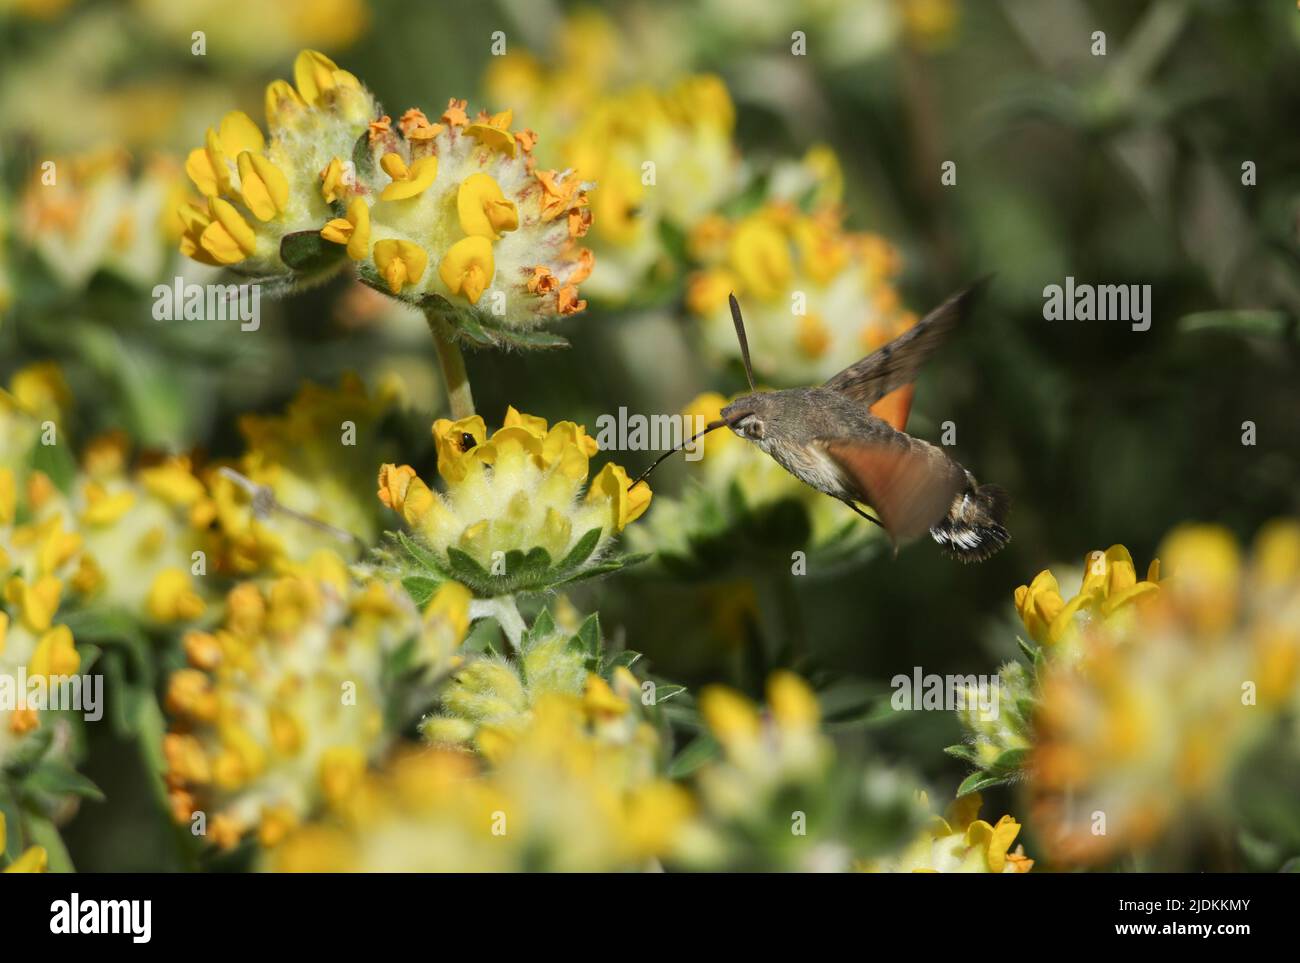 A hovering Hummingbird hawk-moth, Macroglossum stellatarum, nectaring on wild Kidney Vetch flowers on the edge of a costal cliff. Stock Photo